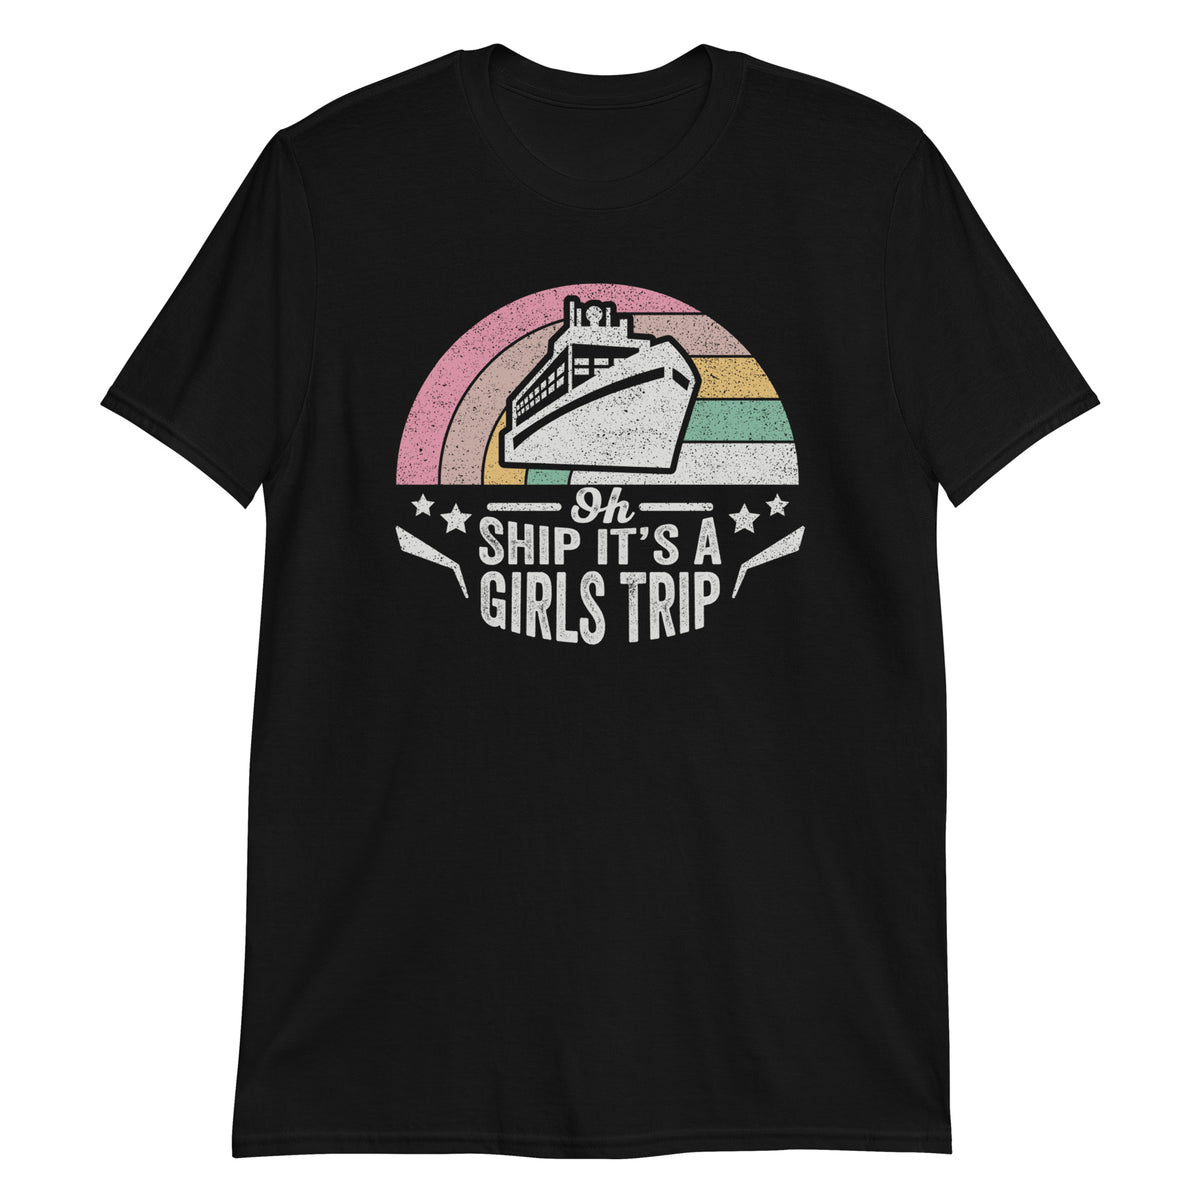 Oh Ship it's a Girls Trip T-Shirt